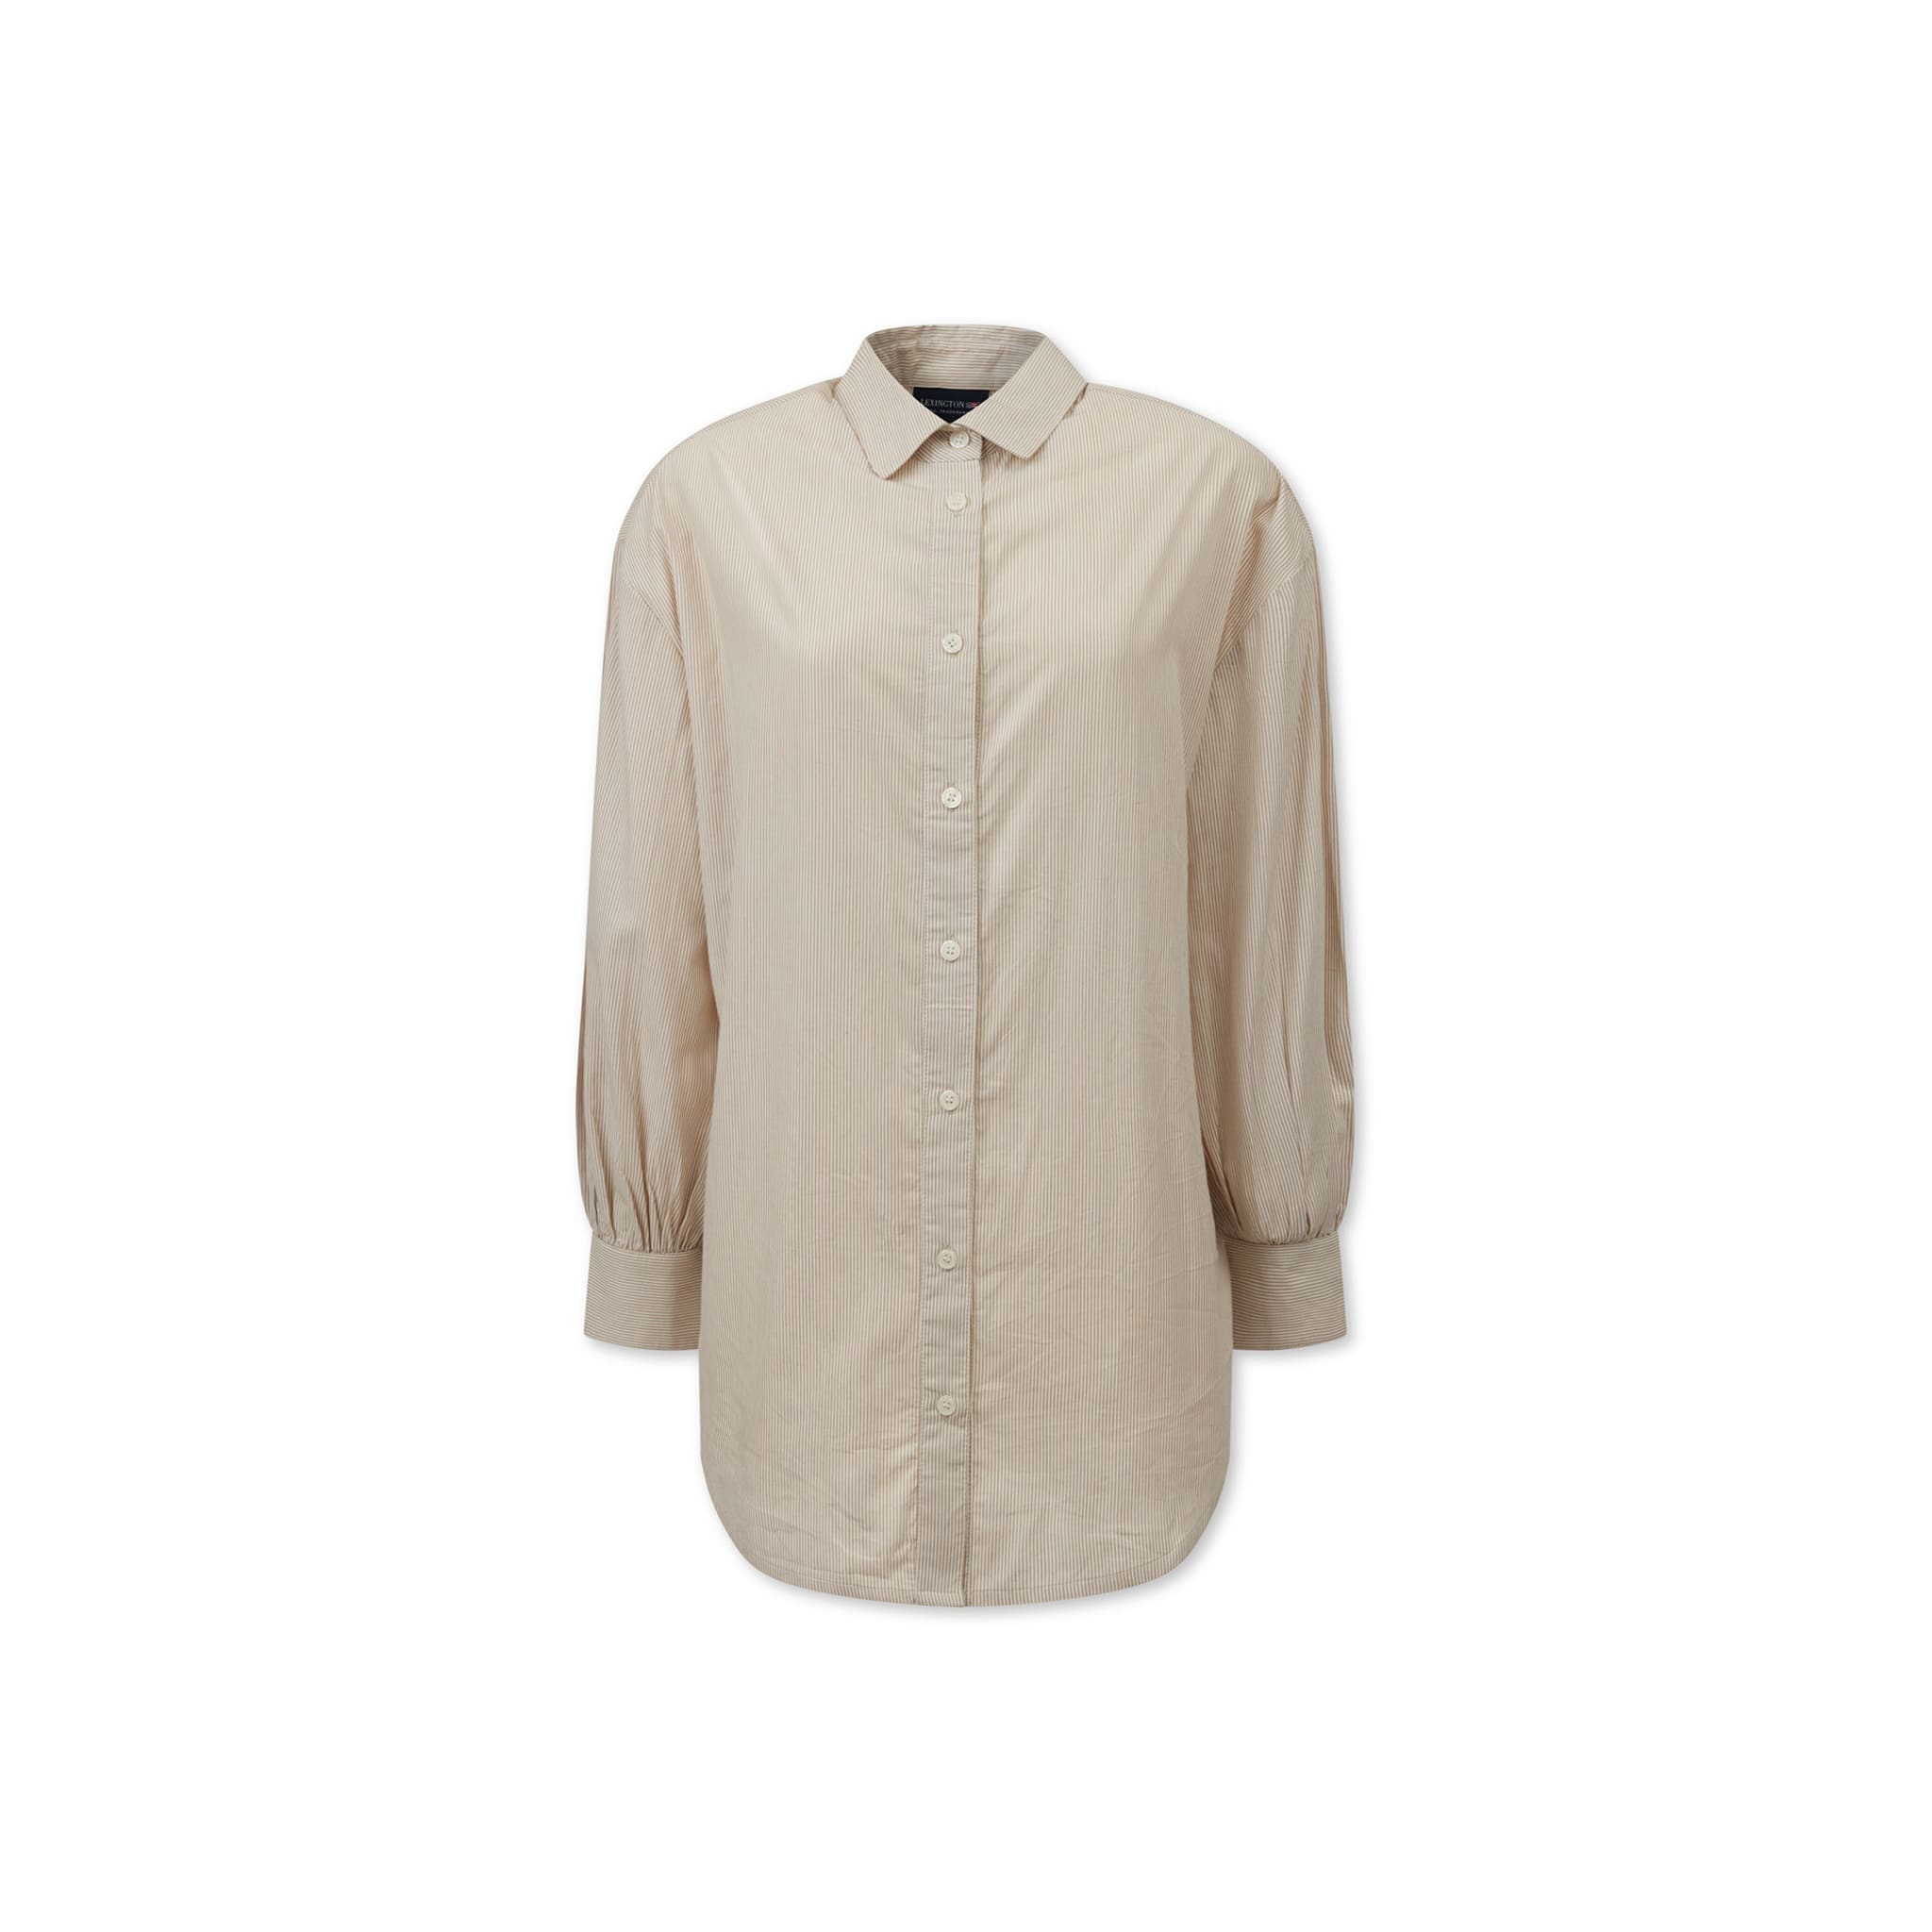 Daphne Organic Cotton Shirt, beige/white stripe